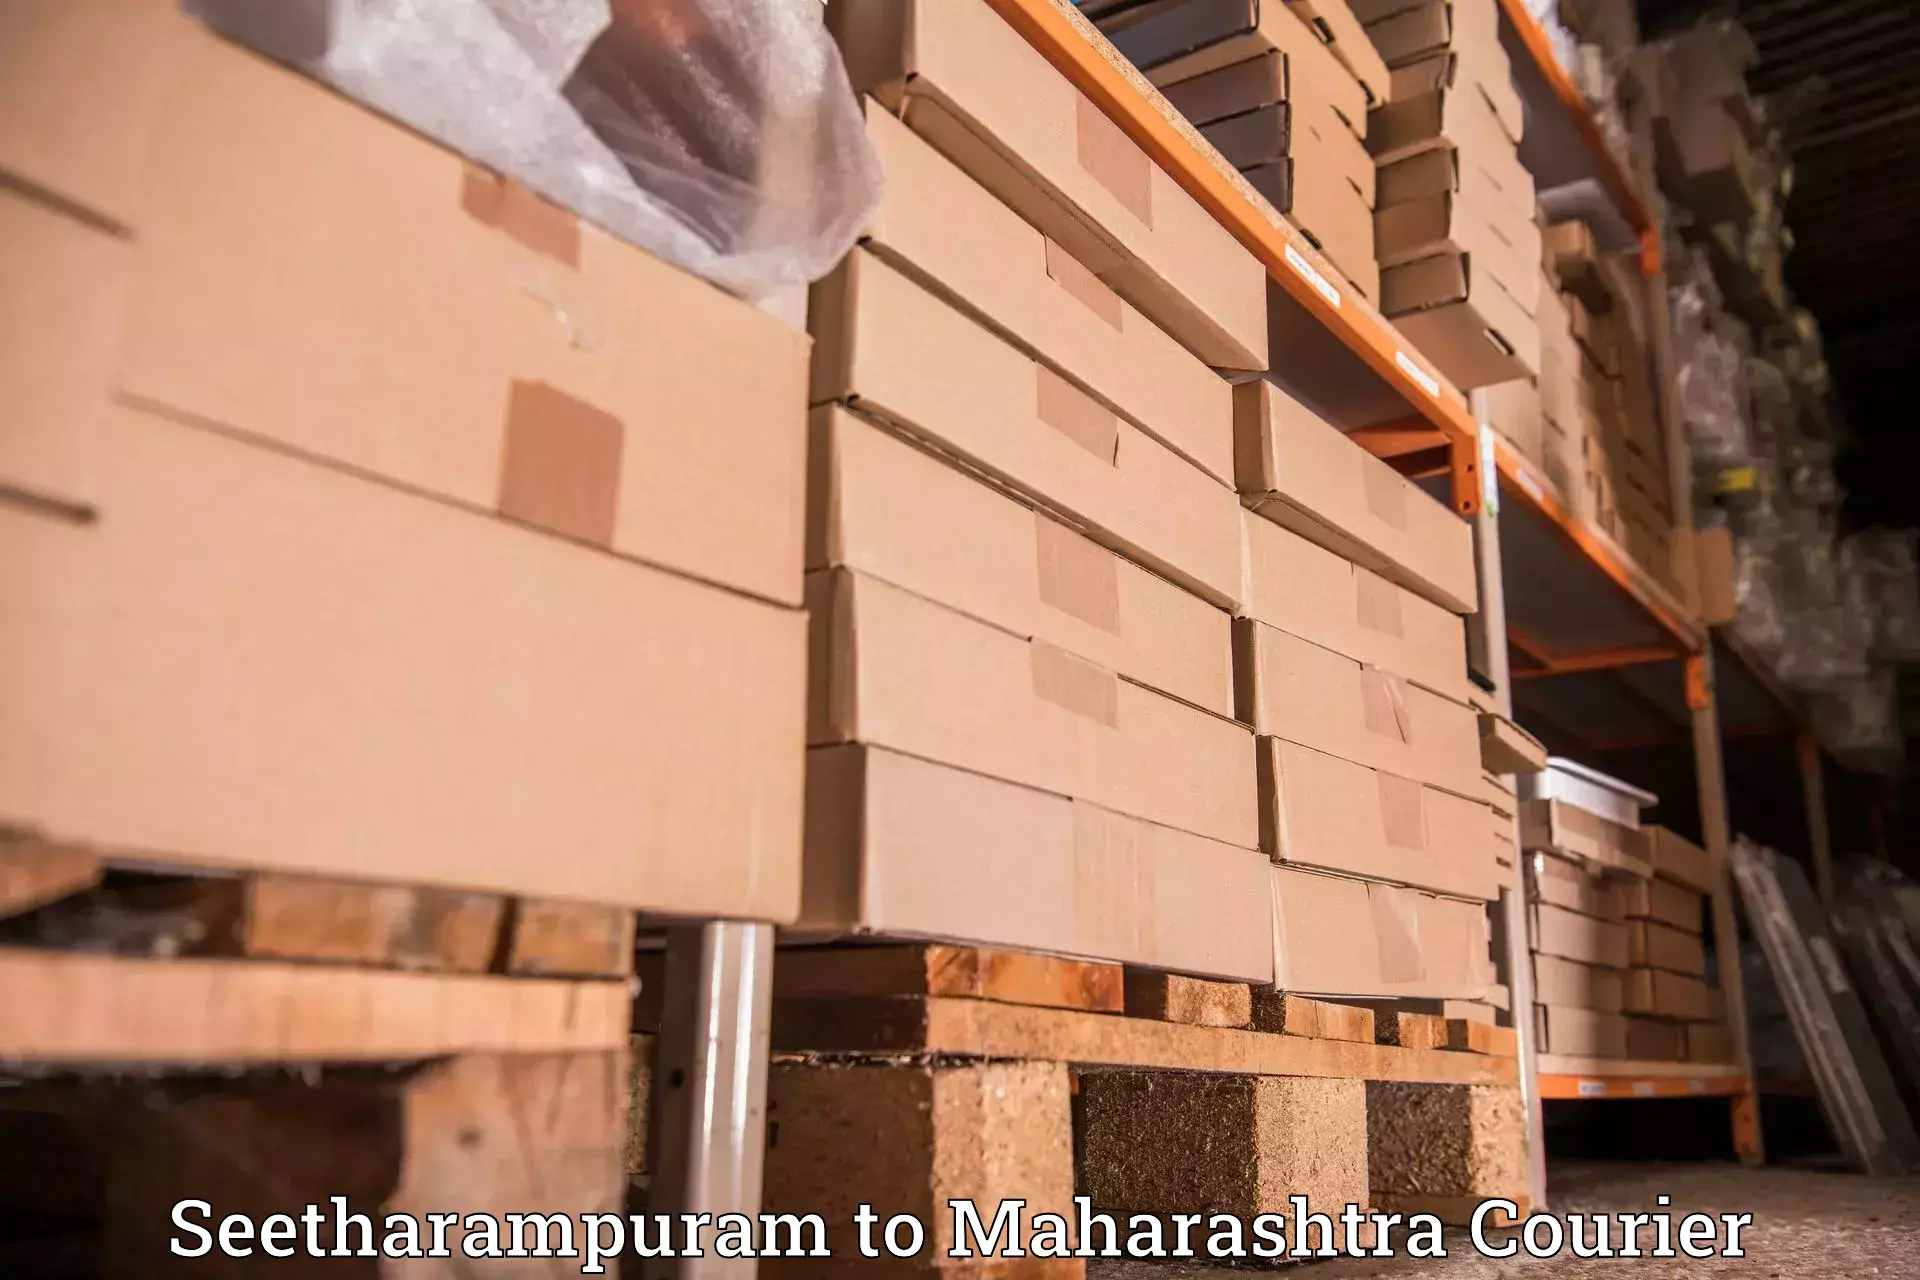 User-friendly delivery service Seetharampuram to Mumbai